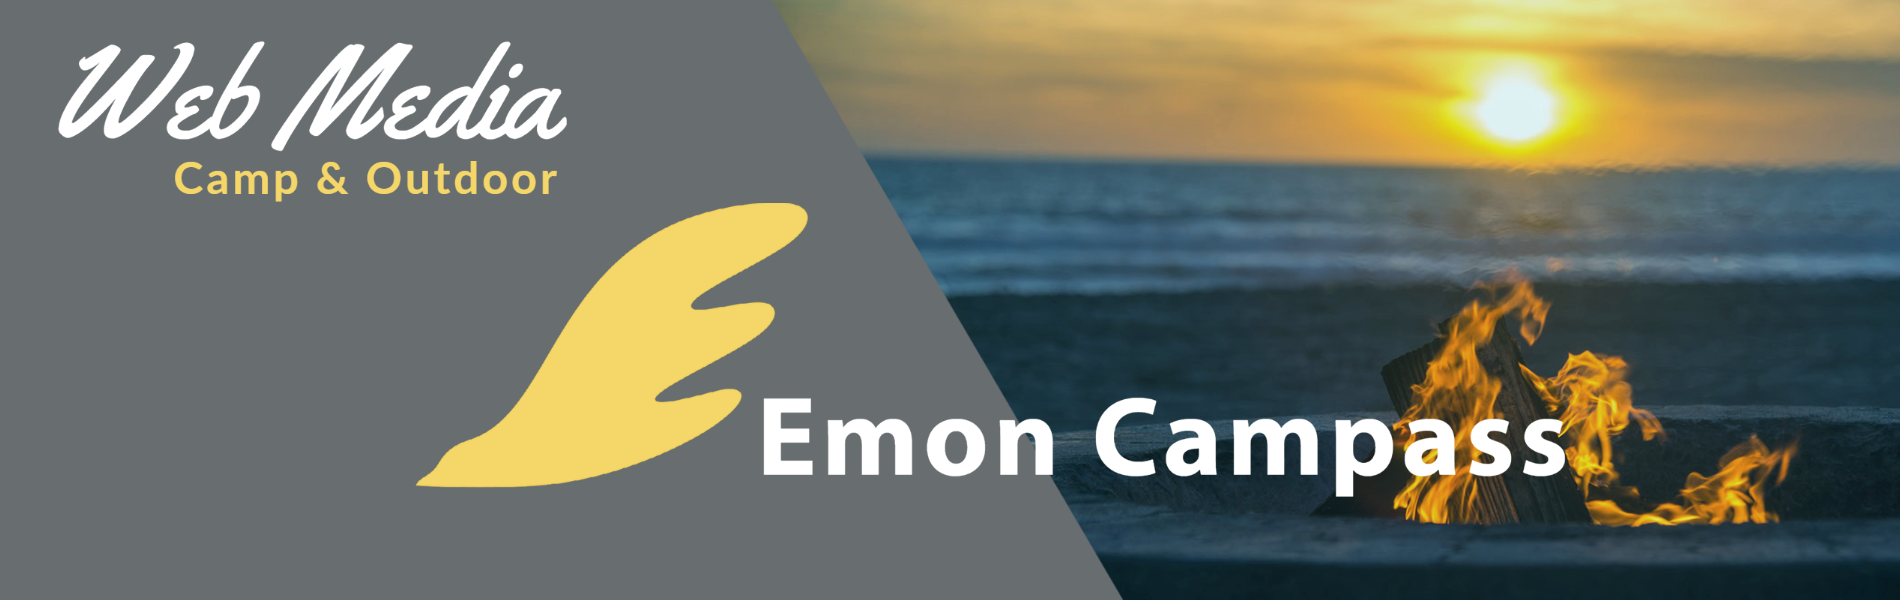 Emon Campass -エモンキャンパス-